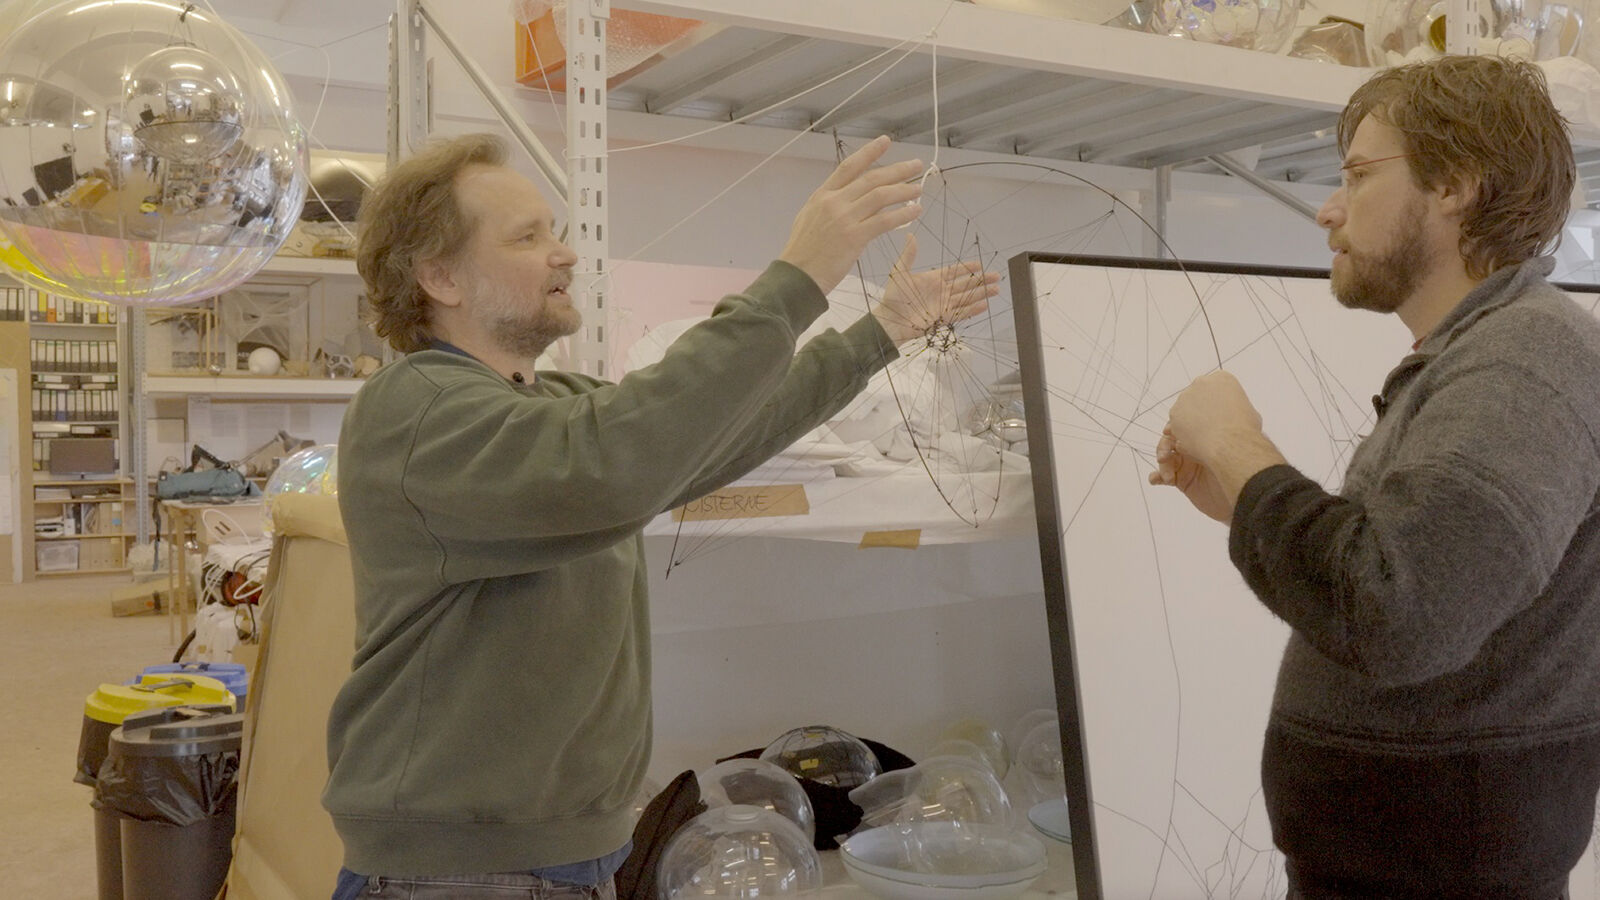 (Image 6) Tomas Saraceno and Harry Halpin in D10collaboration at Tomas Saraceno's studio in Berlin